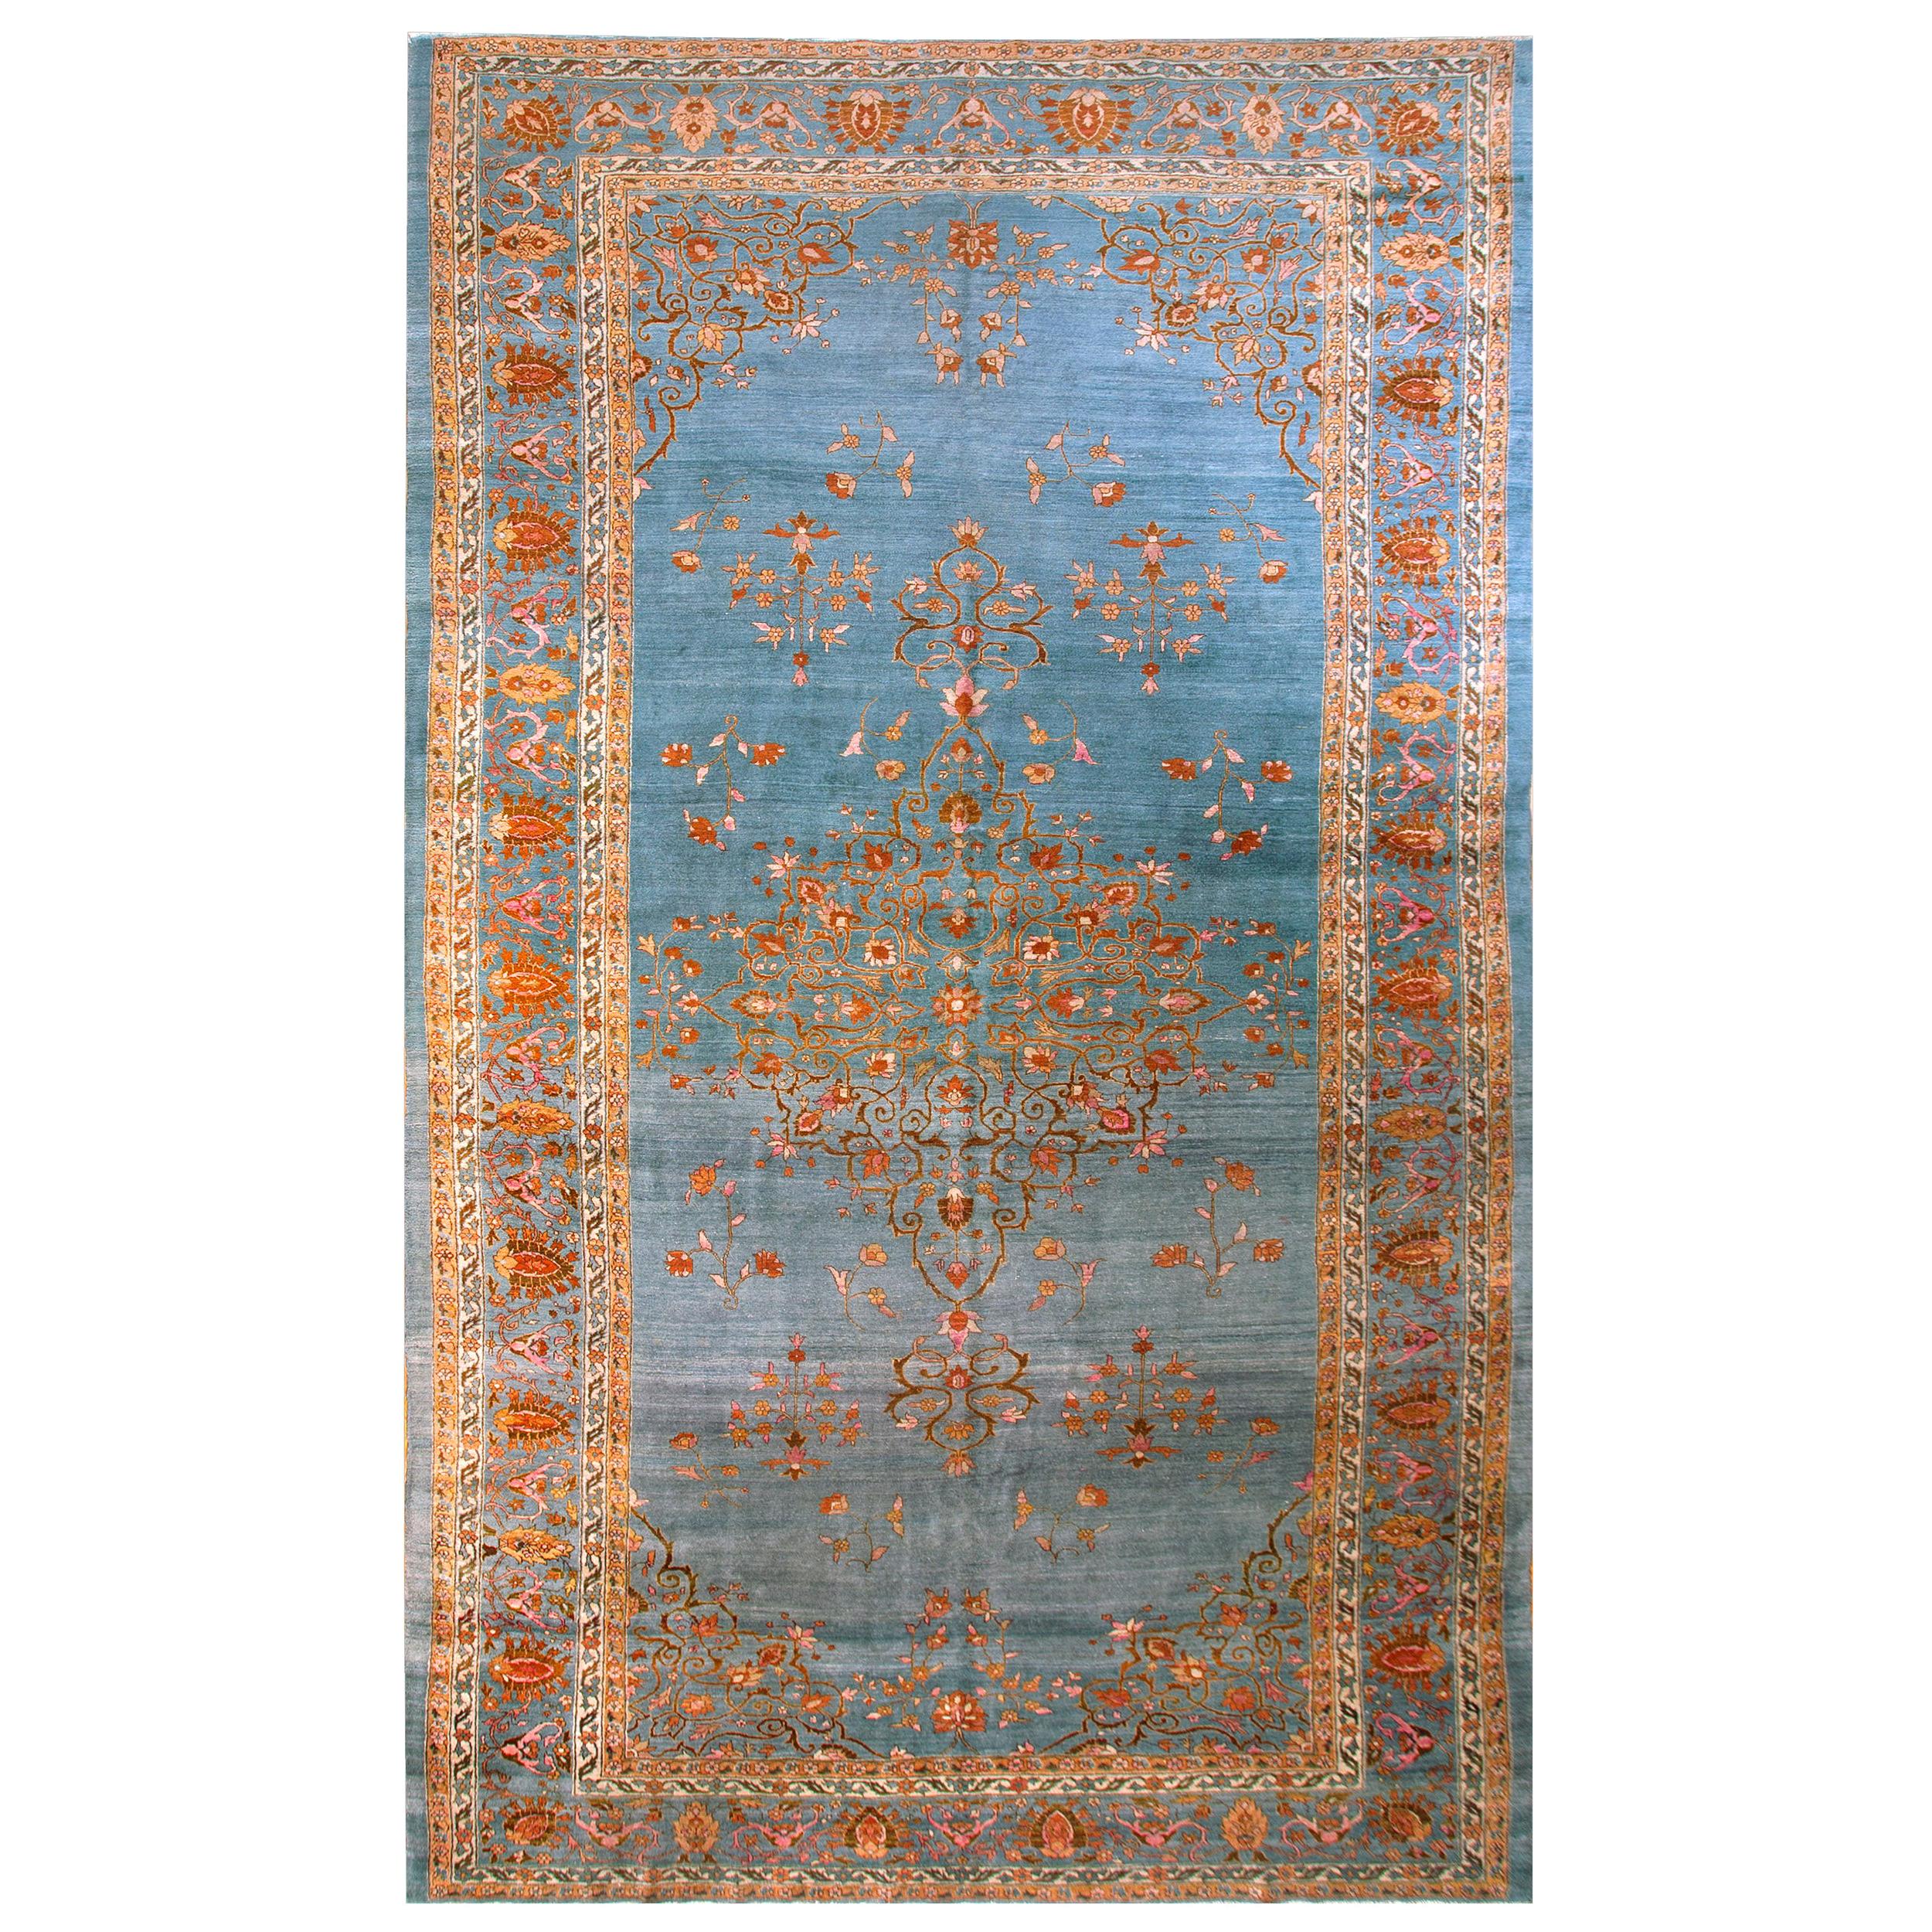 Antique Persian Tabriz Rug 10' 2" x 17' 9"